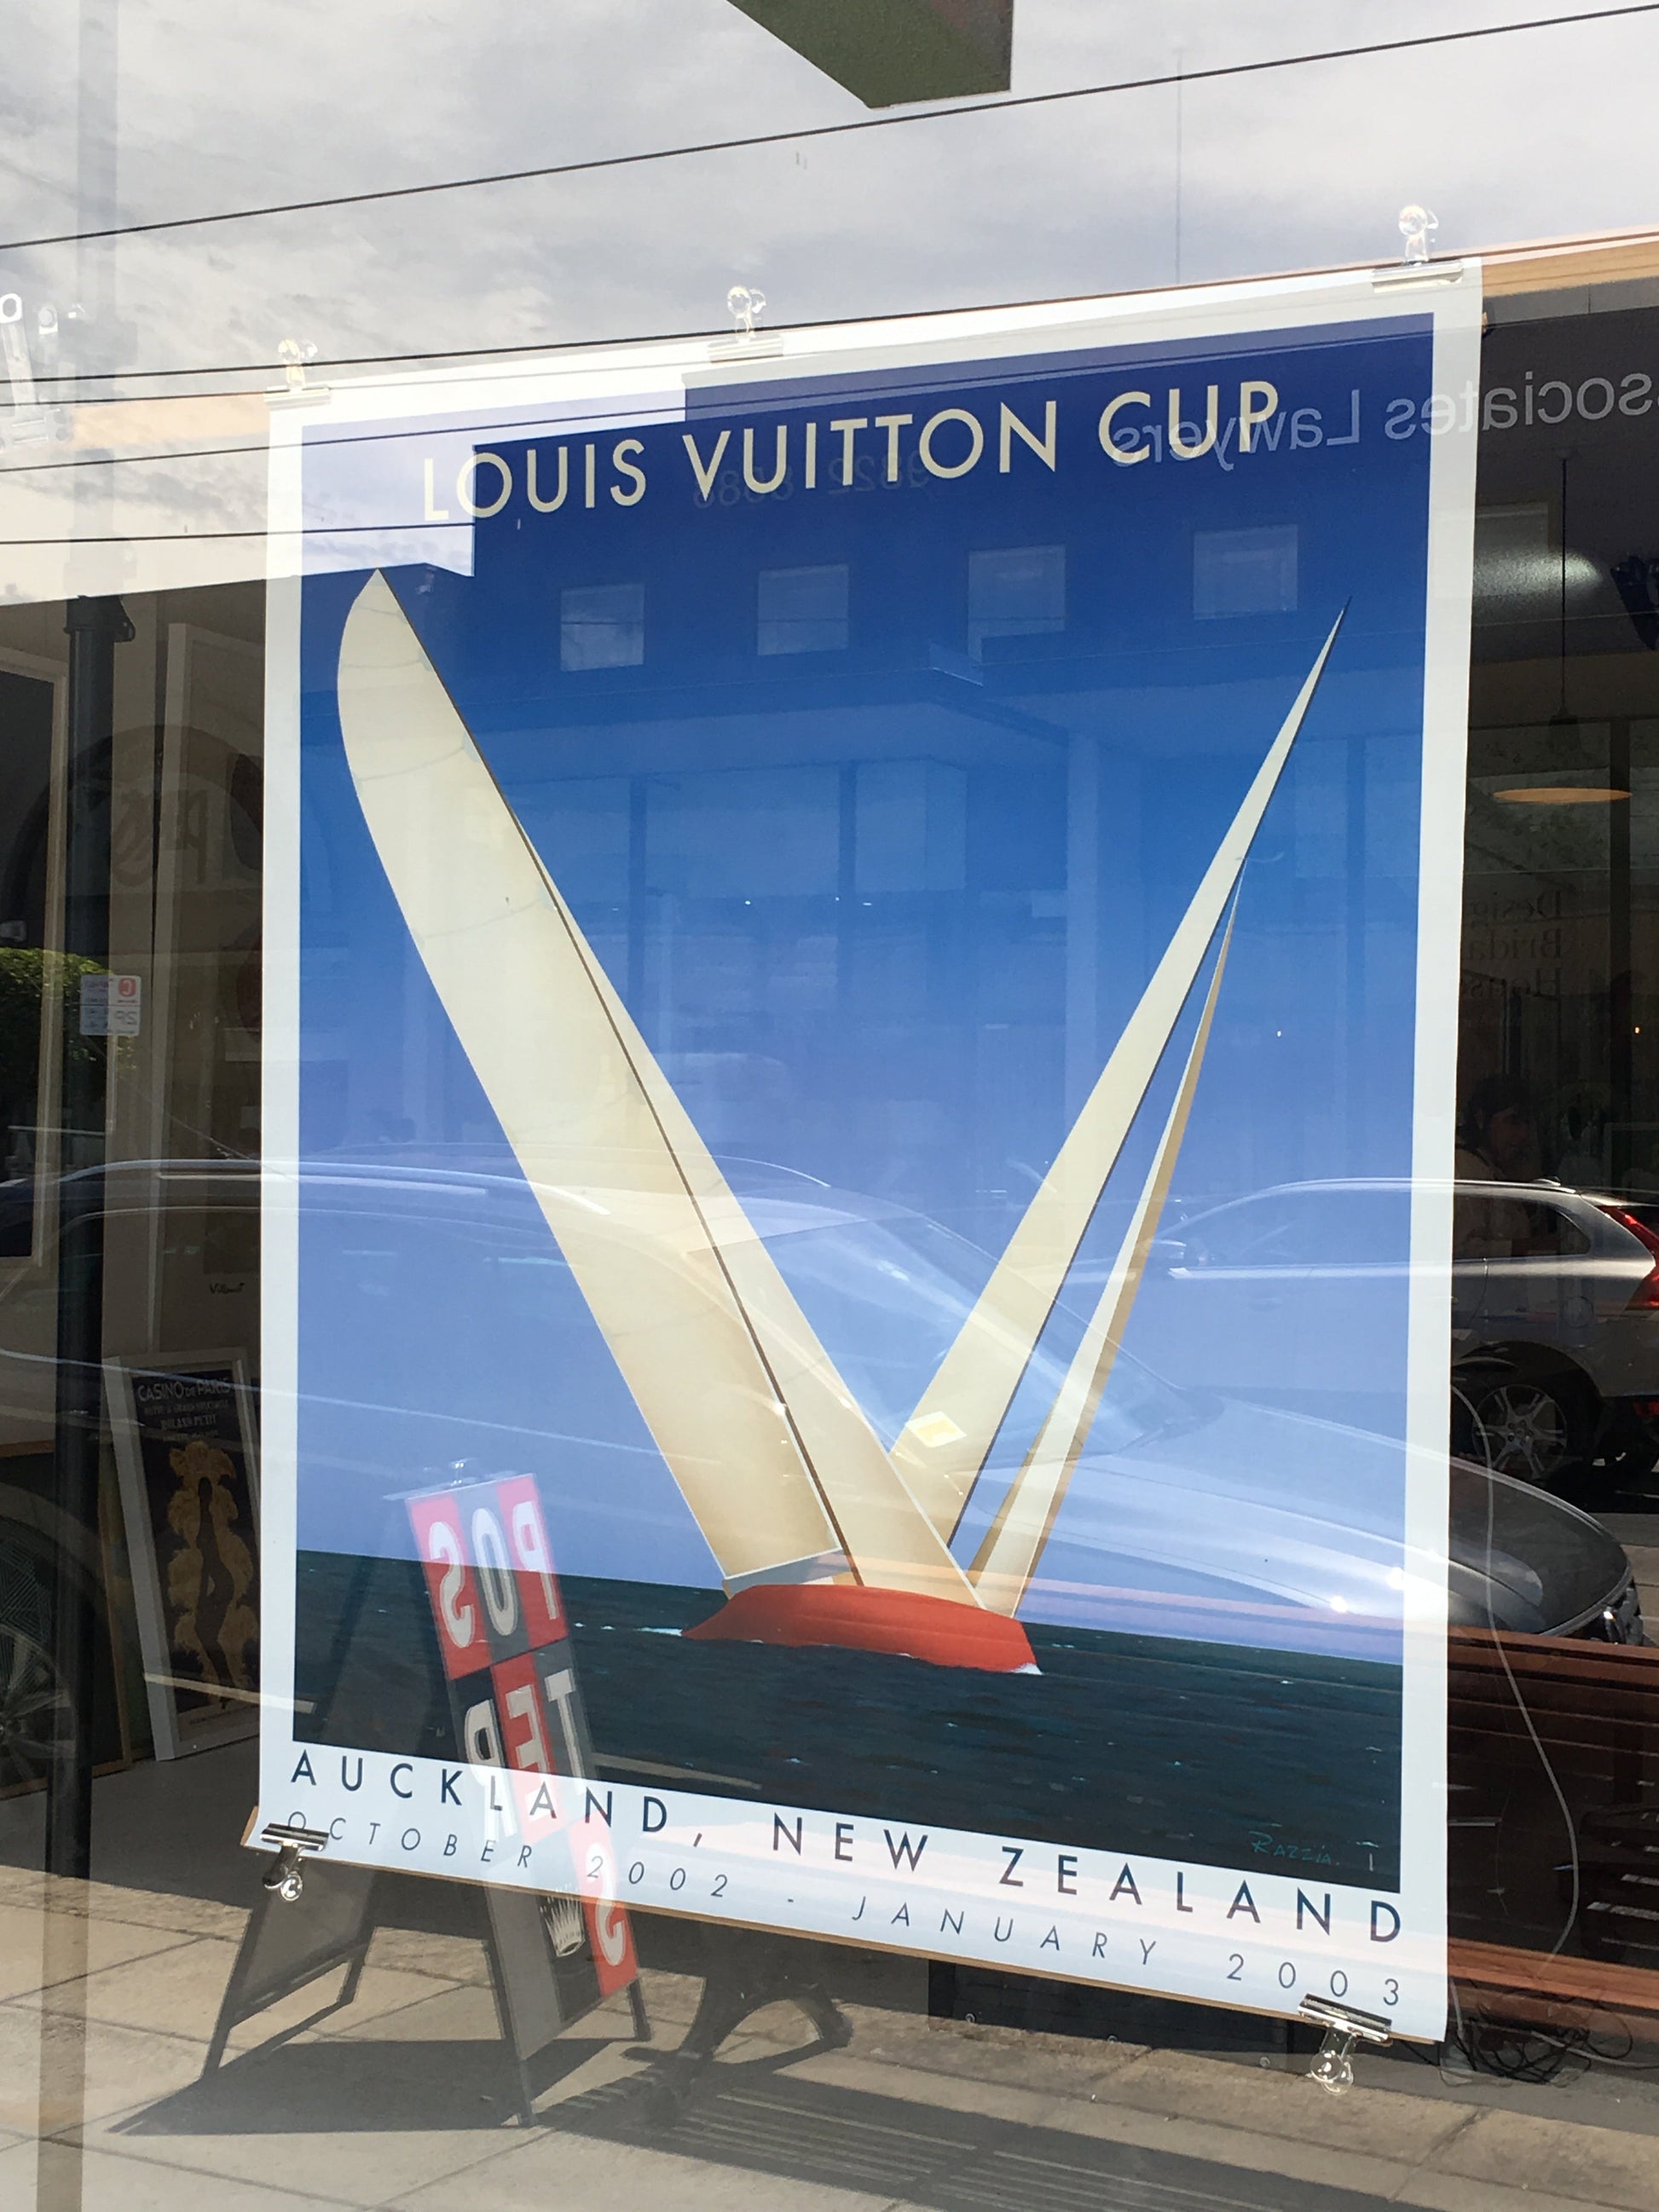 Razzia, Original Louis Vuitton Cup Sailing Poster, Perth Australia